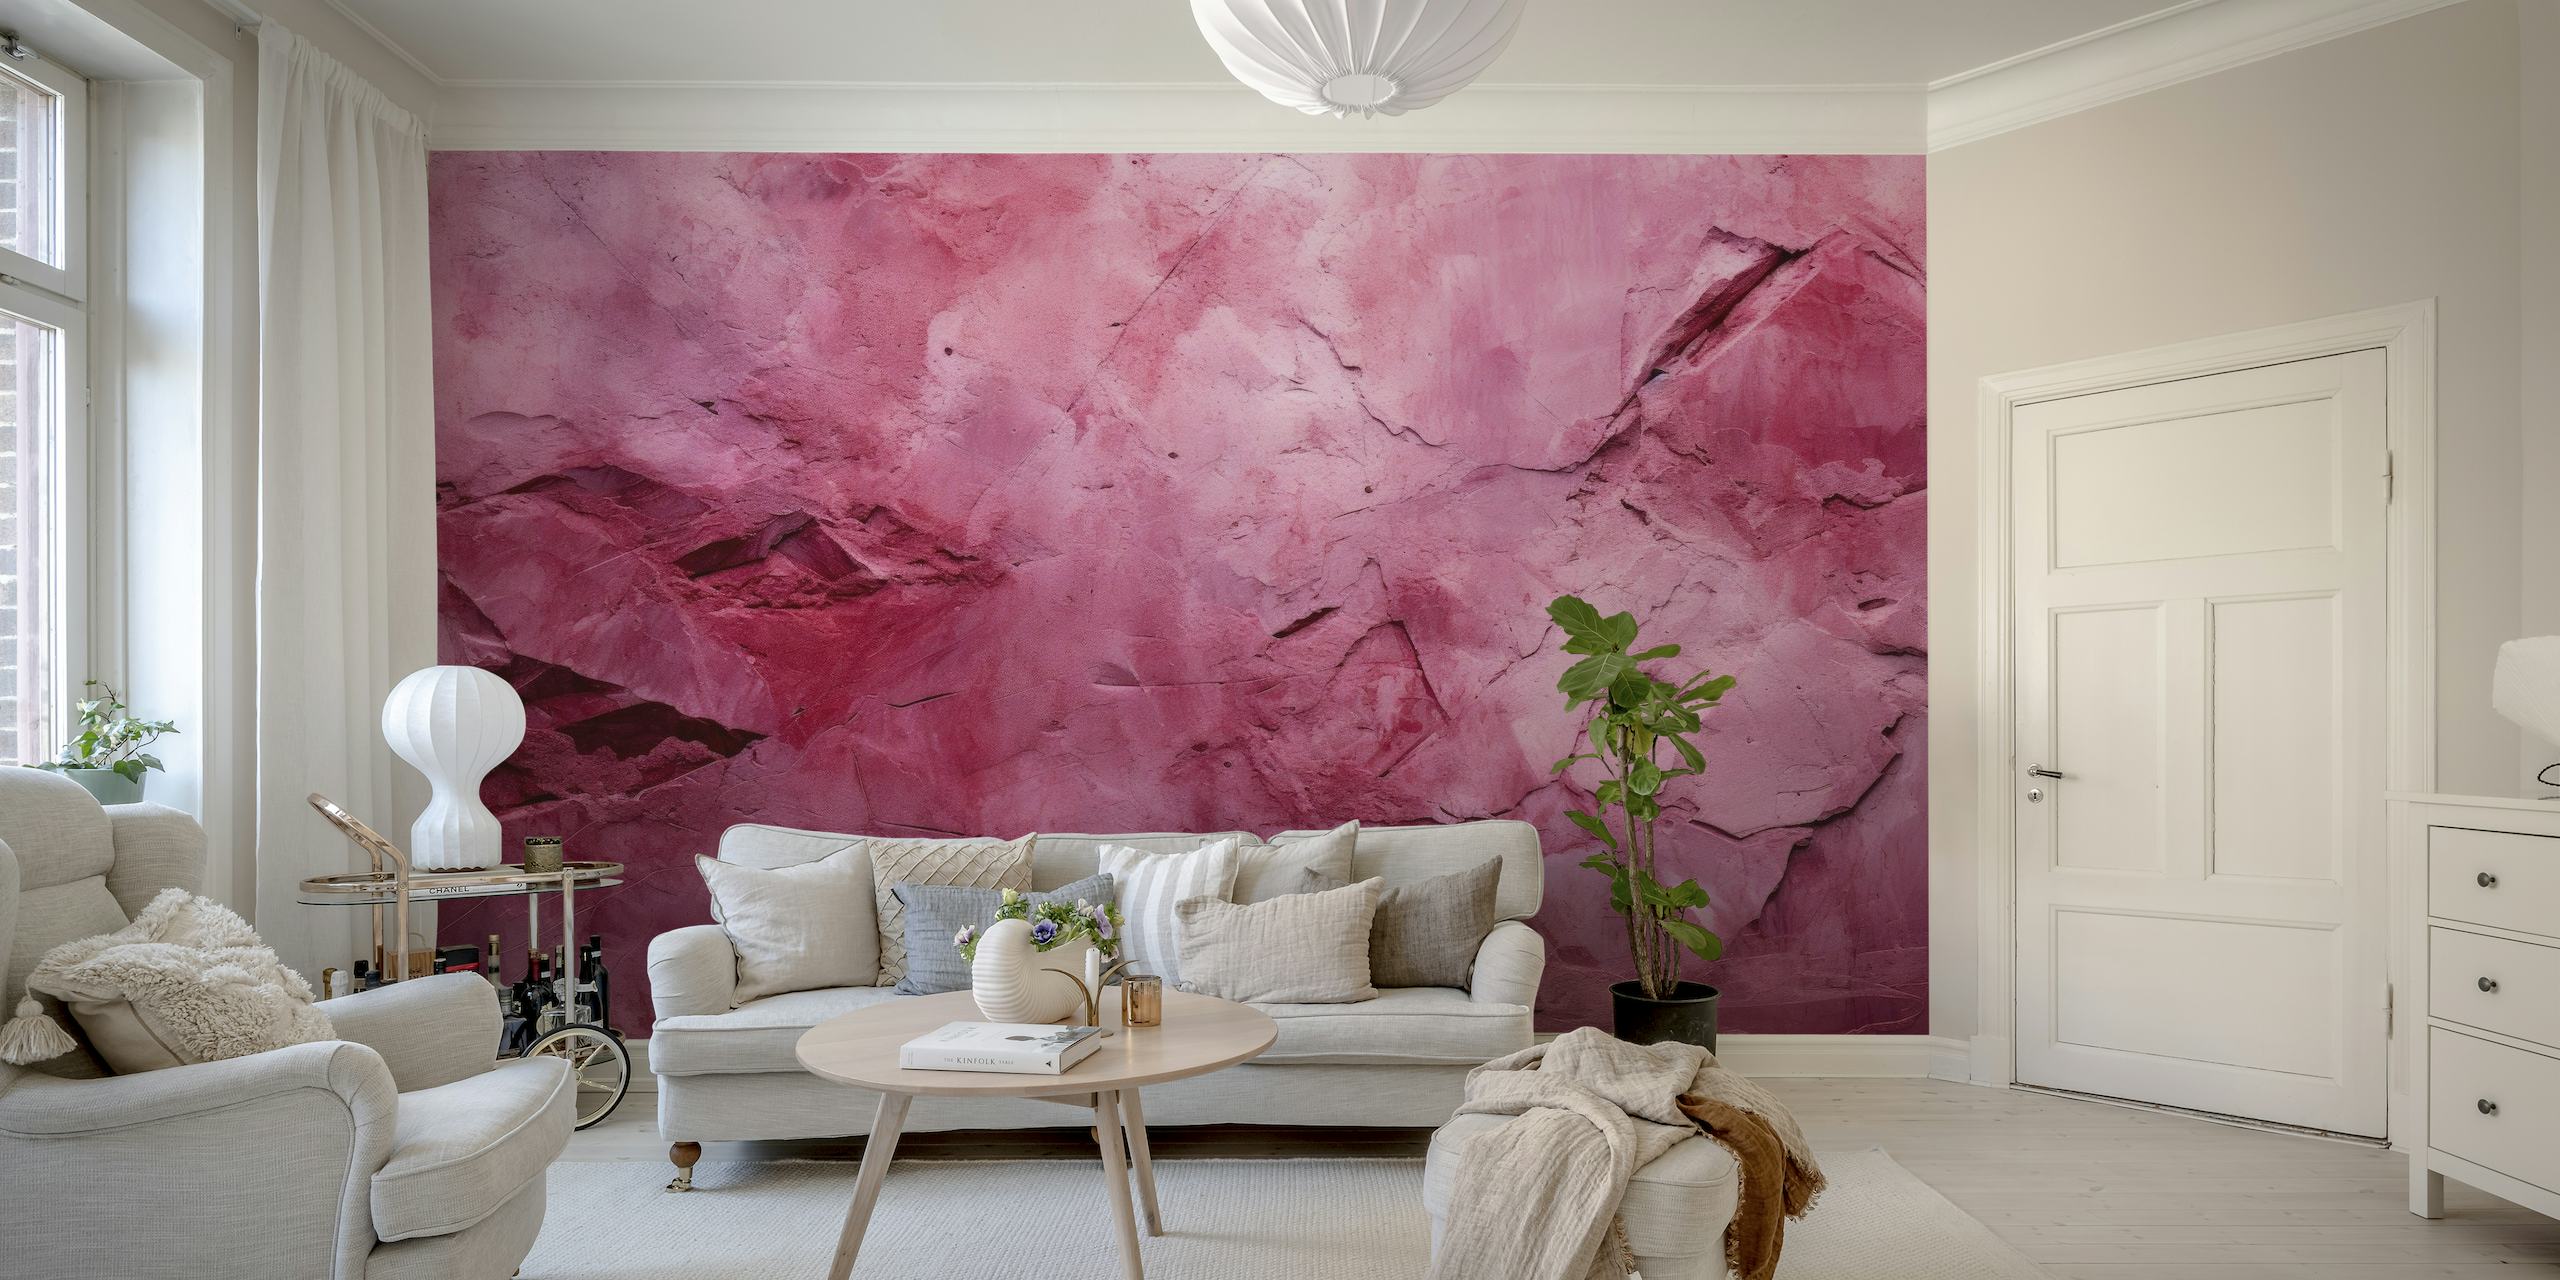 Pink Textured Wall Finish wallpaper